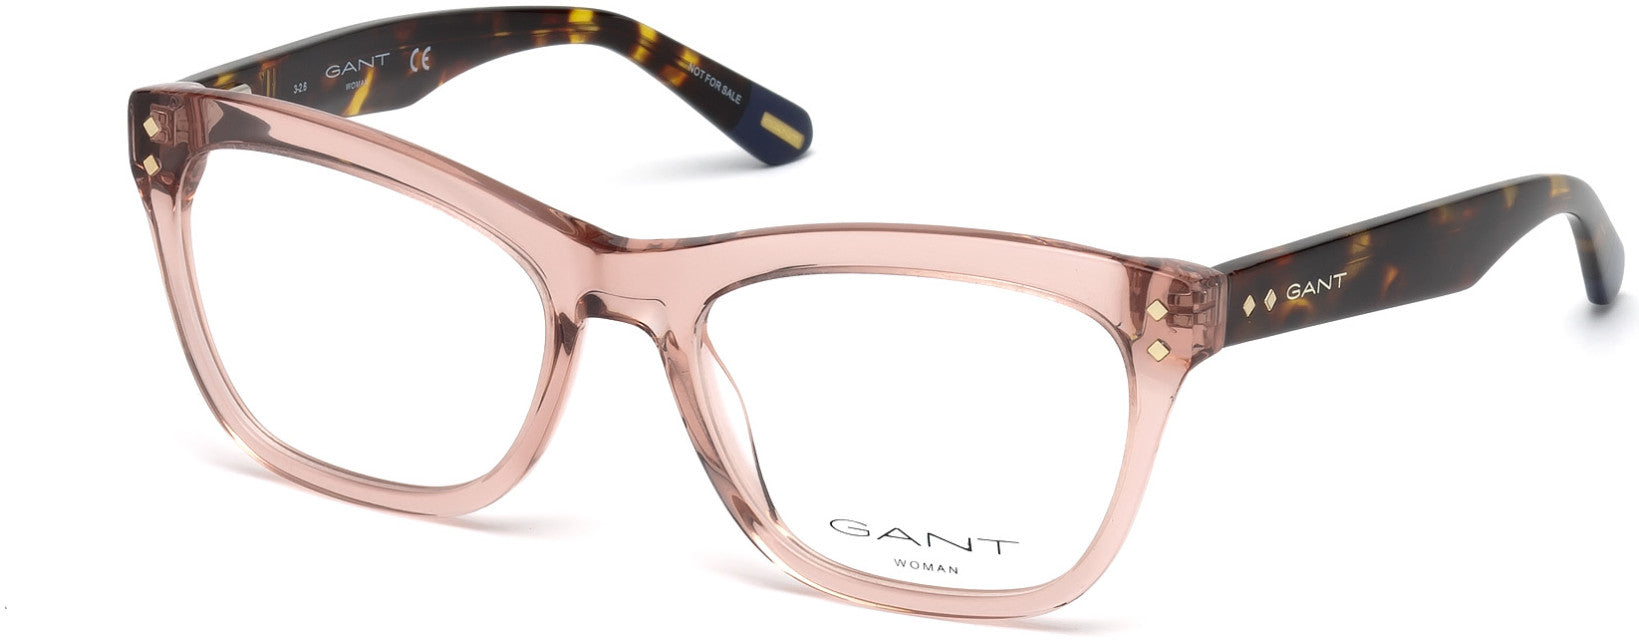 Gant GA4074 Geometric Eyeglasses 045-045 - Shiny Light Brown